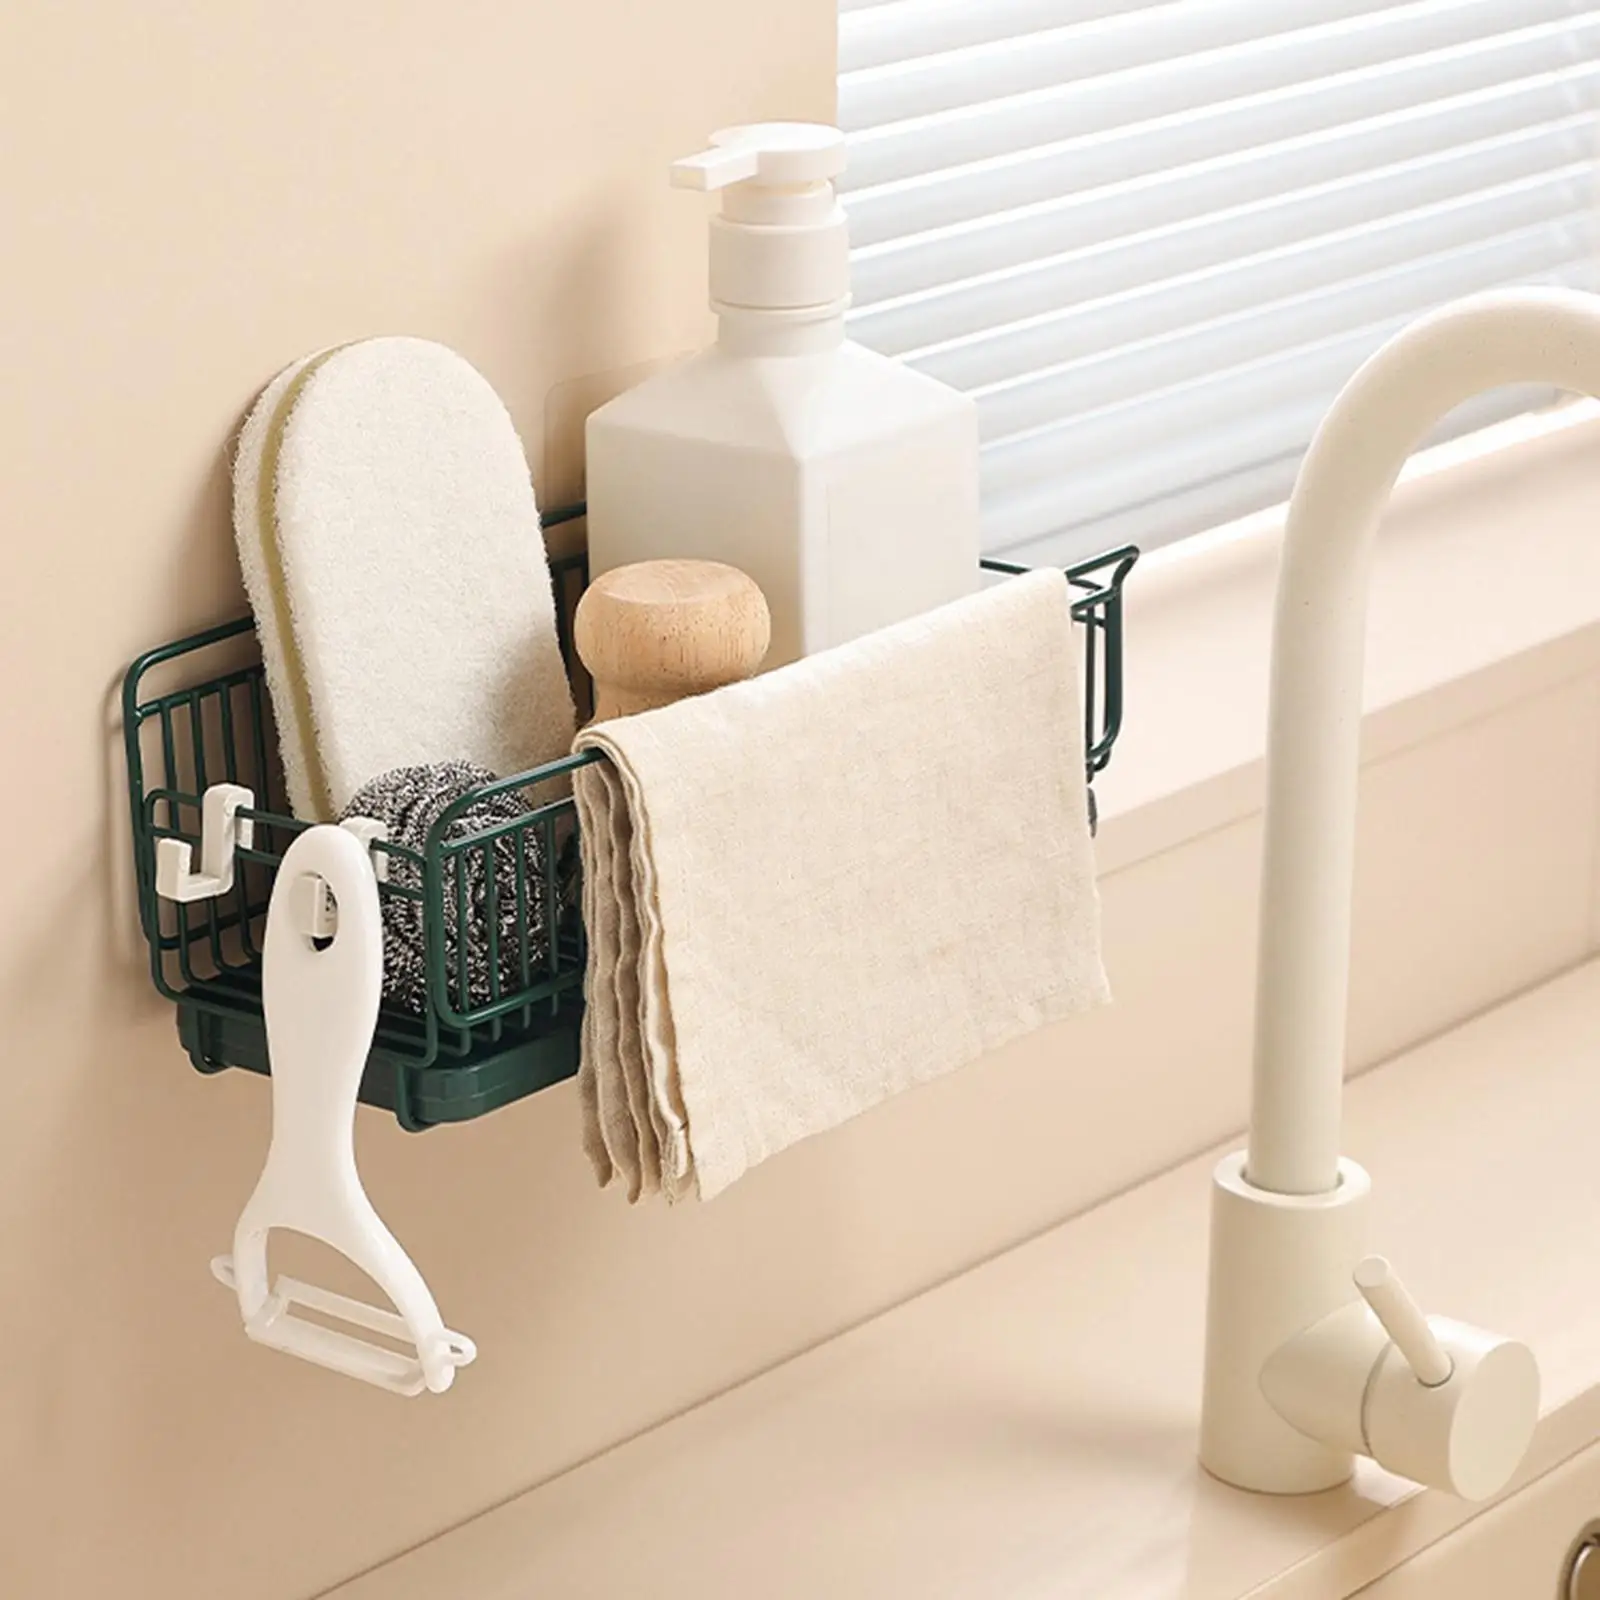 Sink shelf, dish drainer, dishcloth holder, with drain tray, organizer mounted